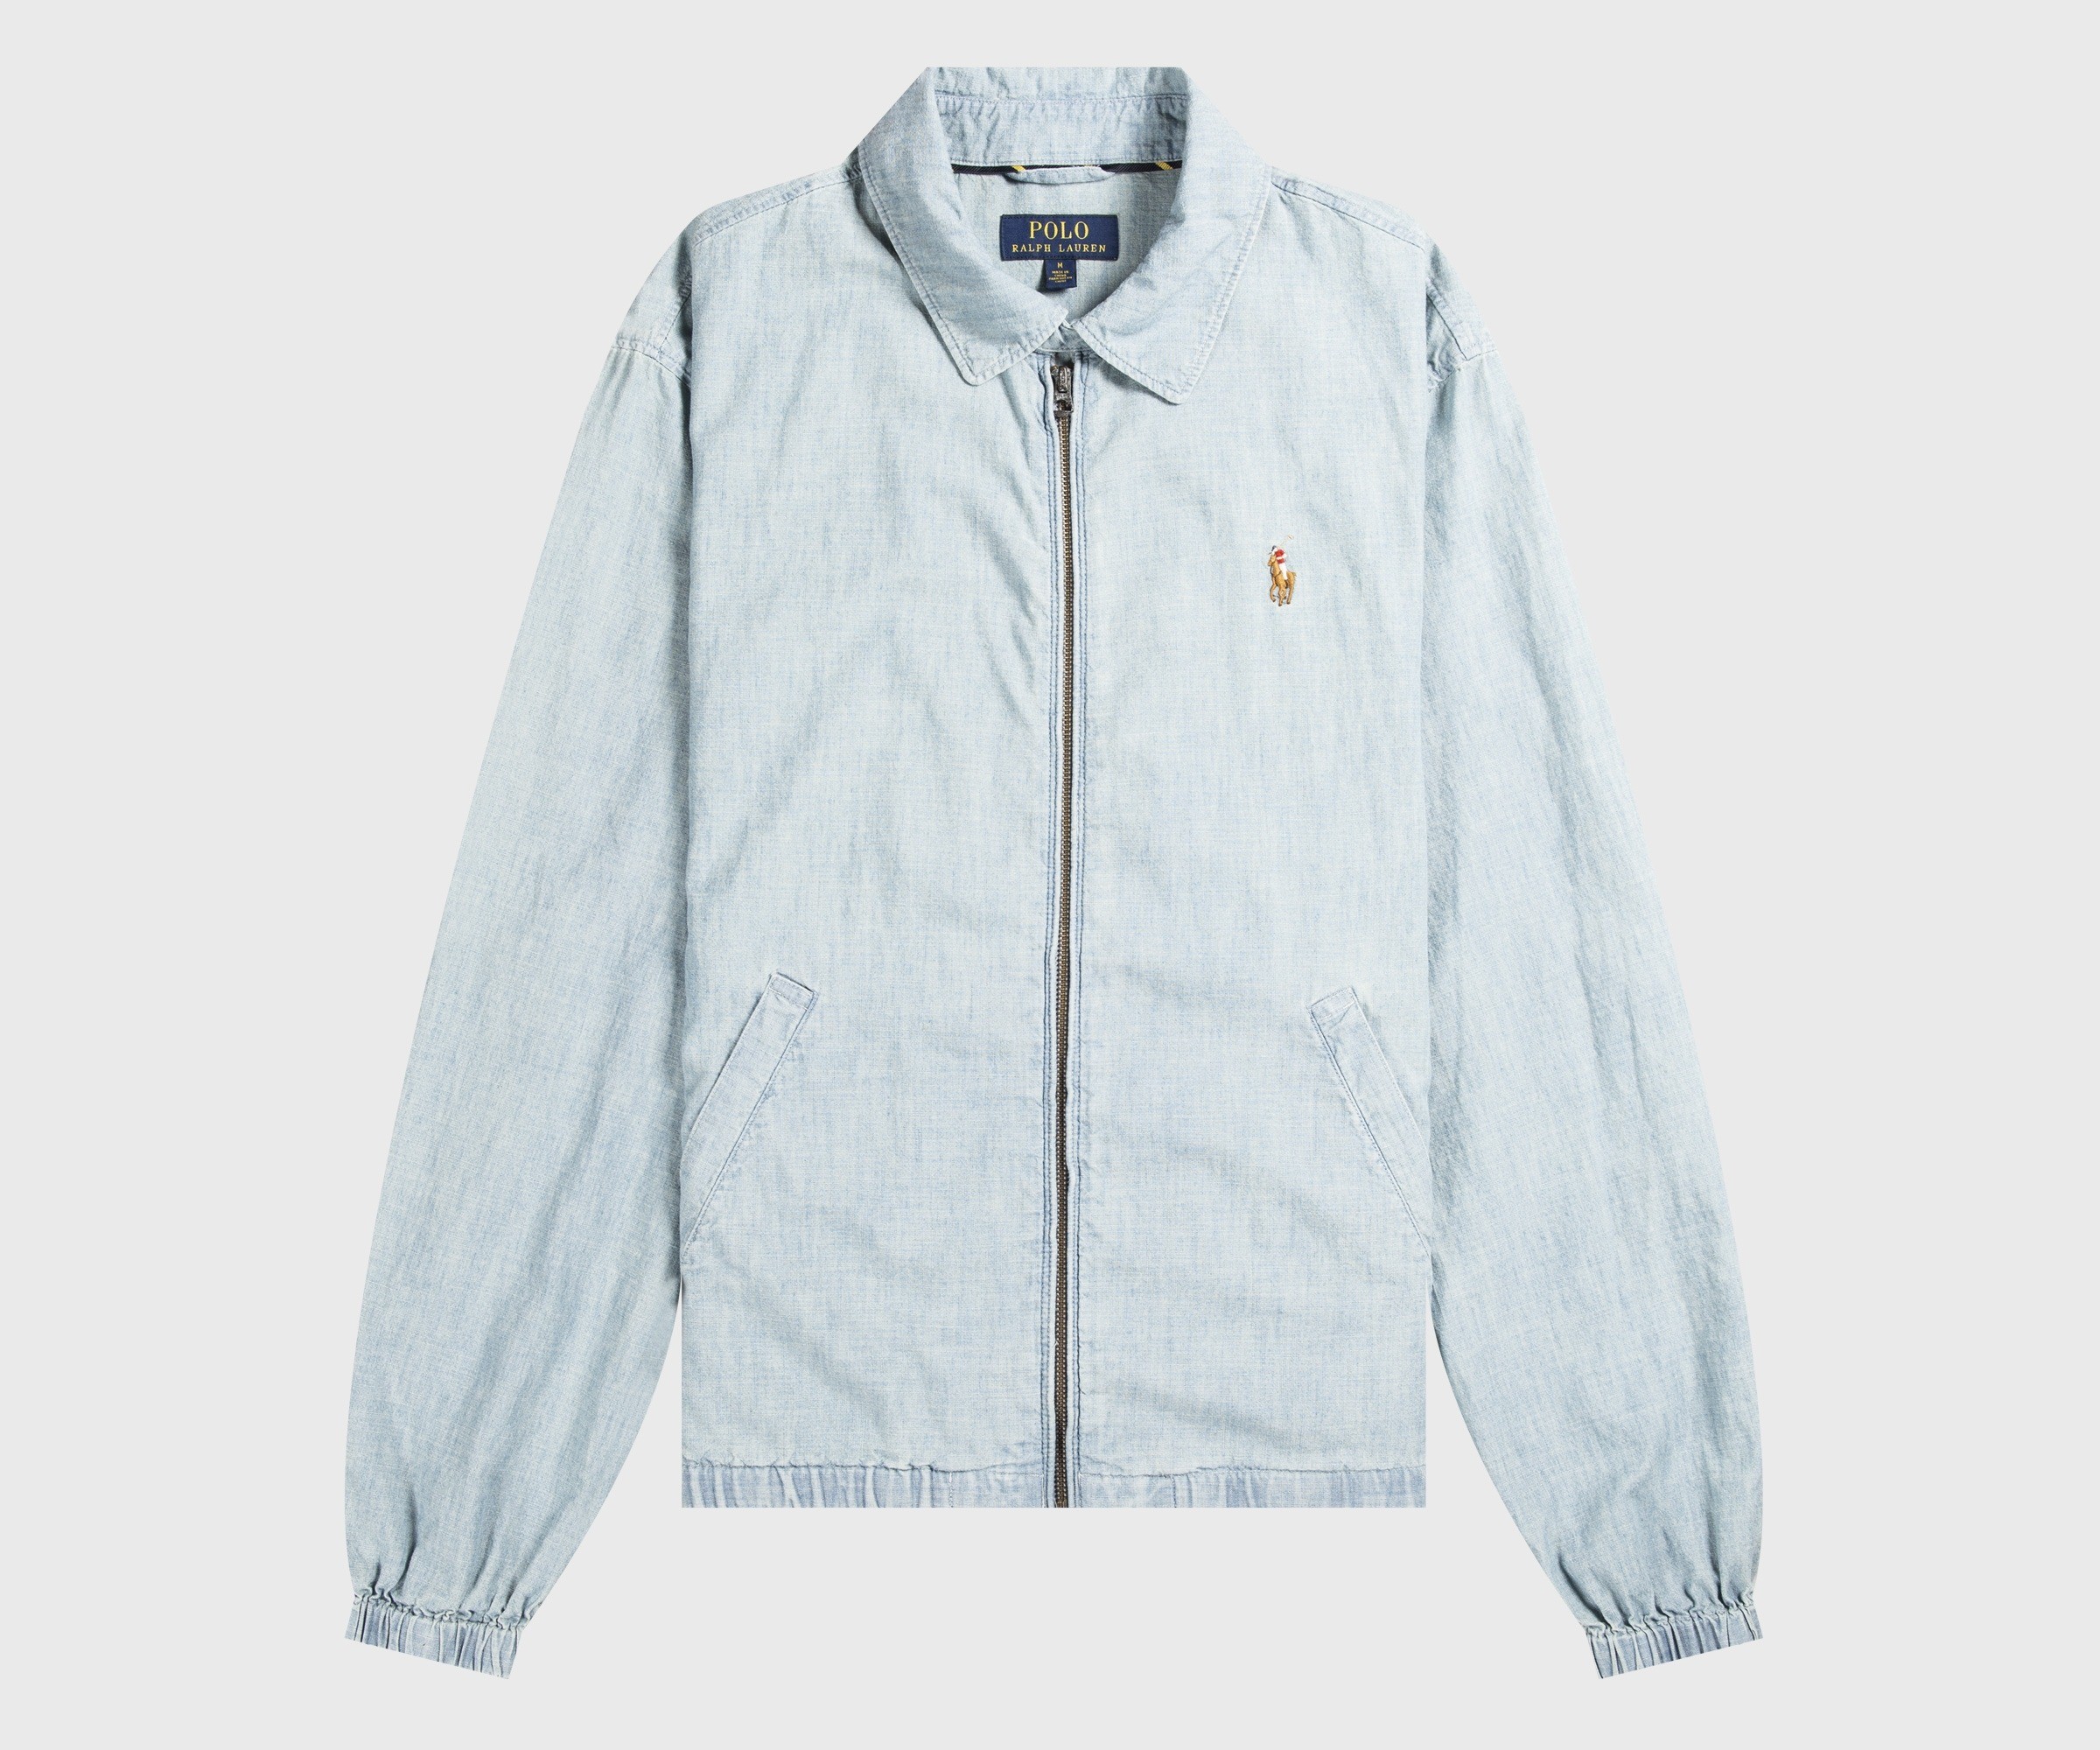 Polo Ralph Lauren 'Bayport' Chambray Jacket